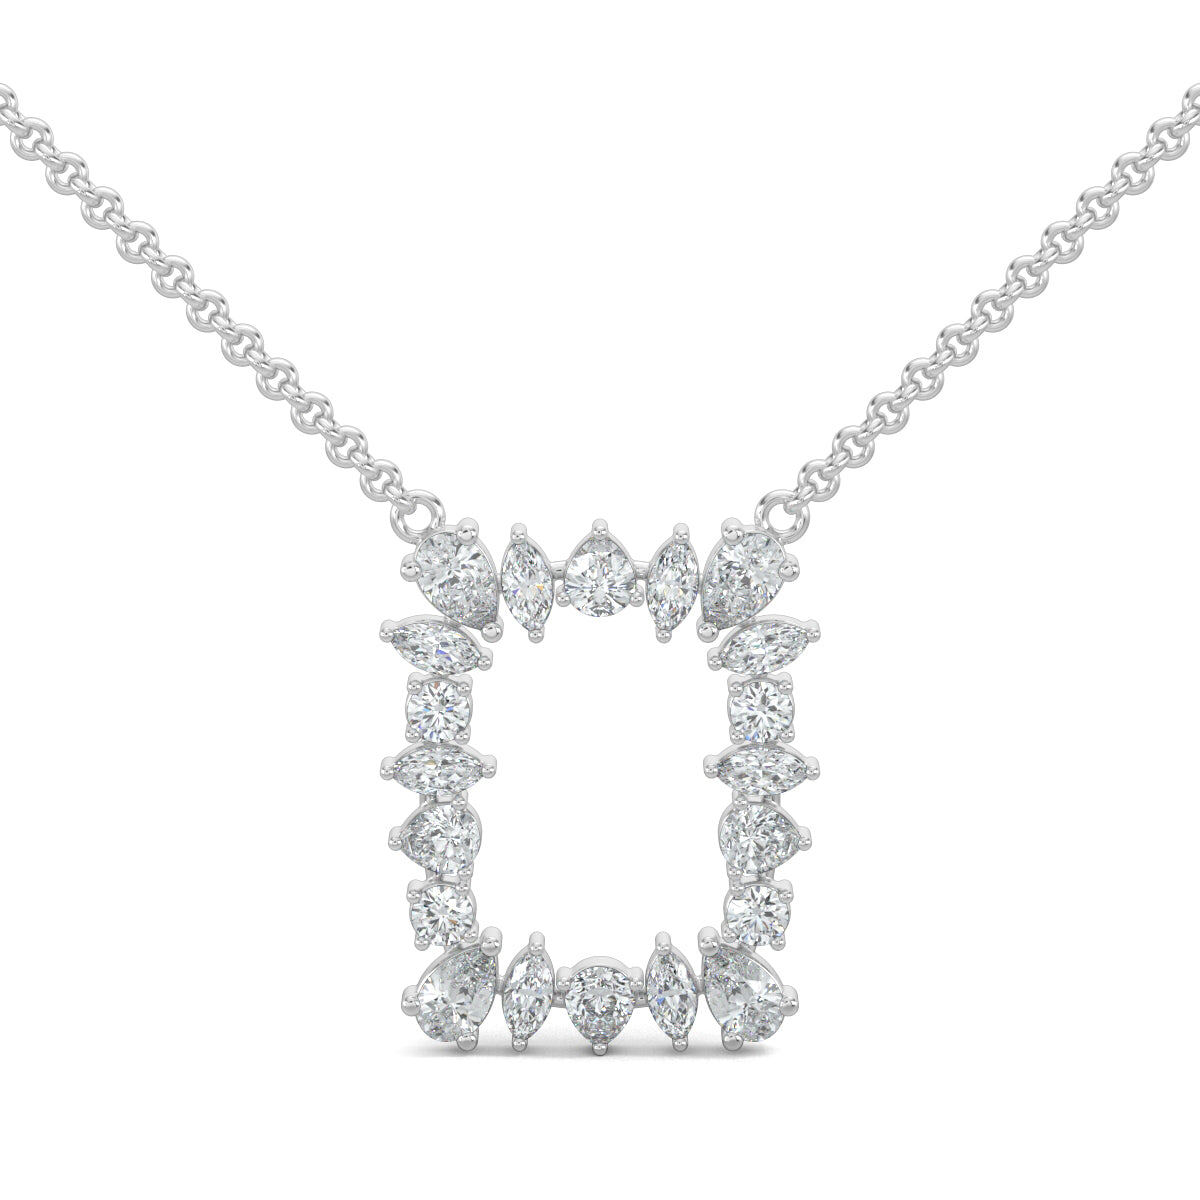 White Gold, Diamond Pendants, Natural diamond pendant, Lab-grown diamond pendant, casual pendant, rectangle metal pendant, marquise diamonds, pear diamonds, round diamonds, elegant jewelry, sustainable luxury, everyday sparkle.